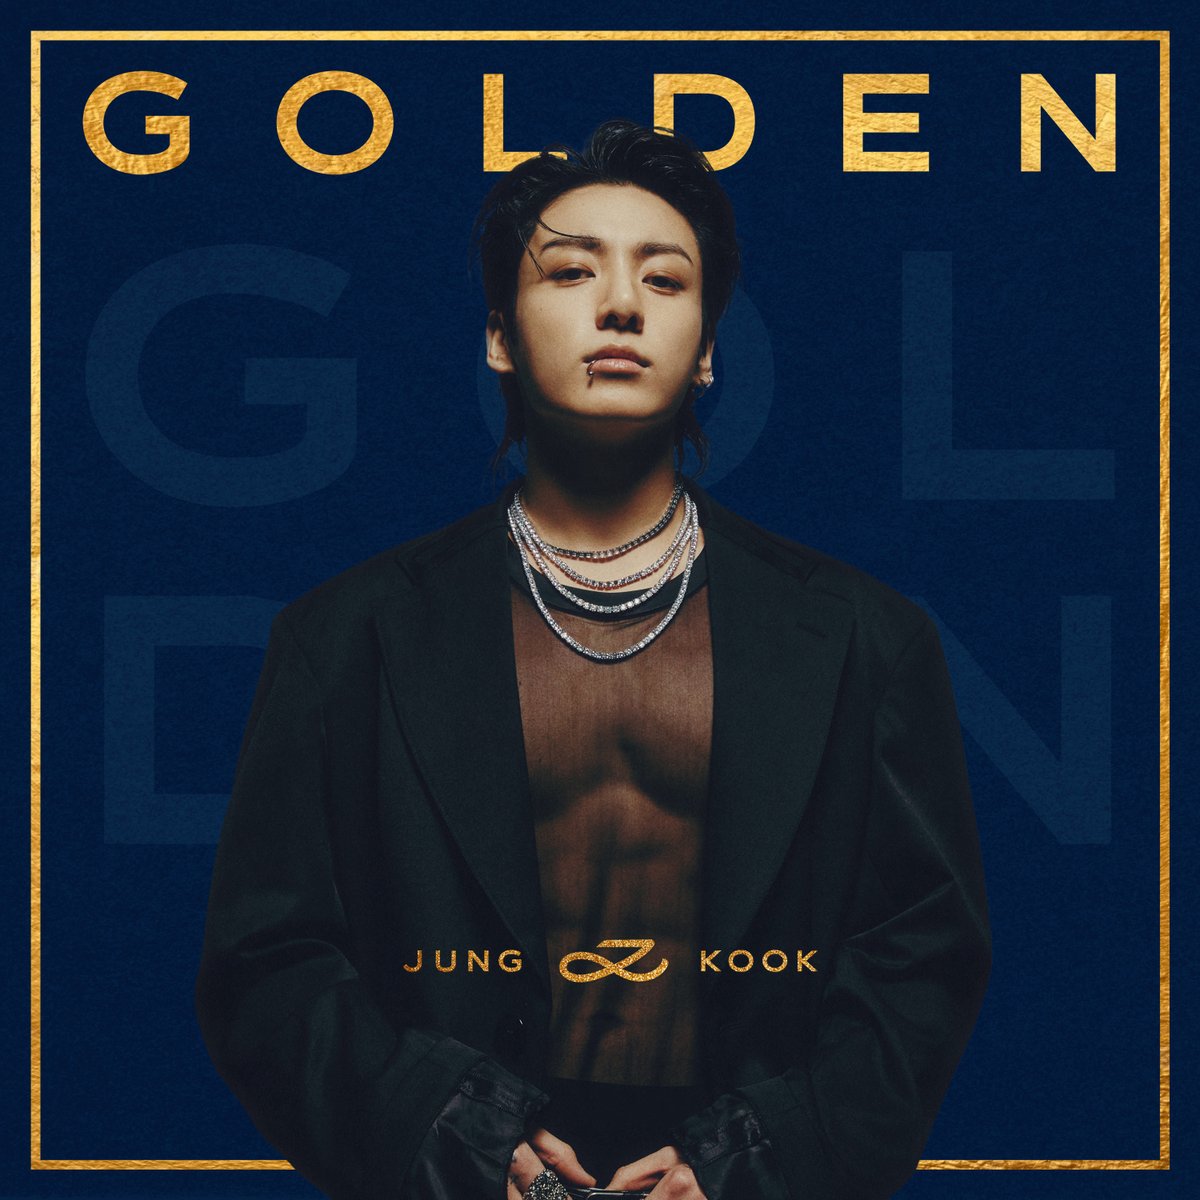 Jungkook's 'Golden' has surpassed 2.7 million copies on Circle Album Chart!